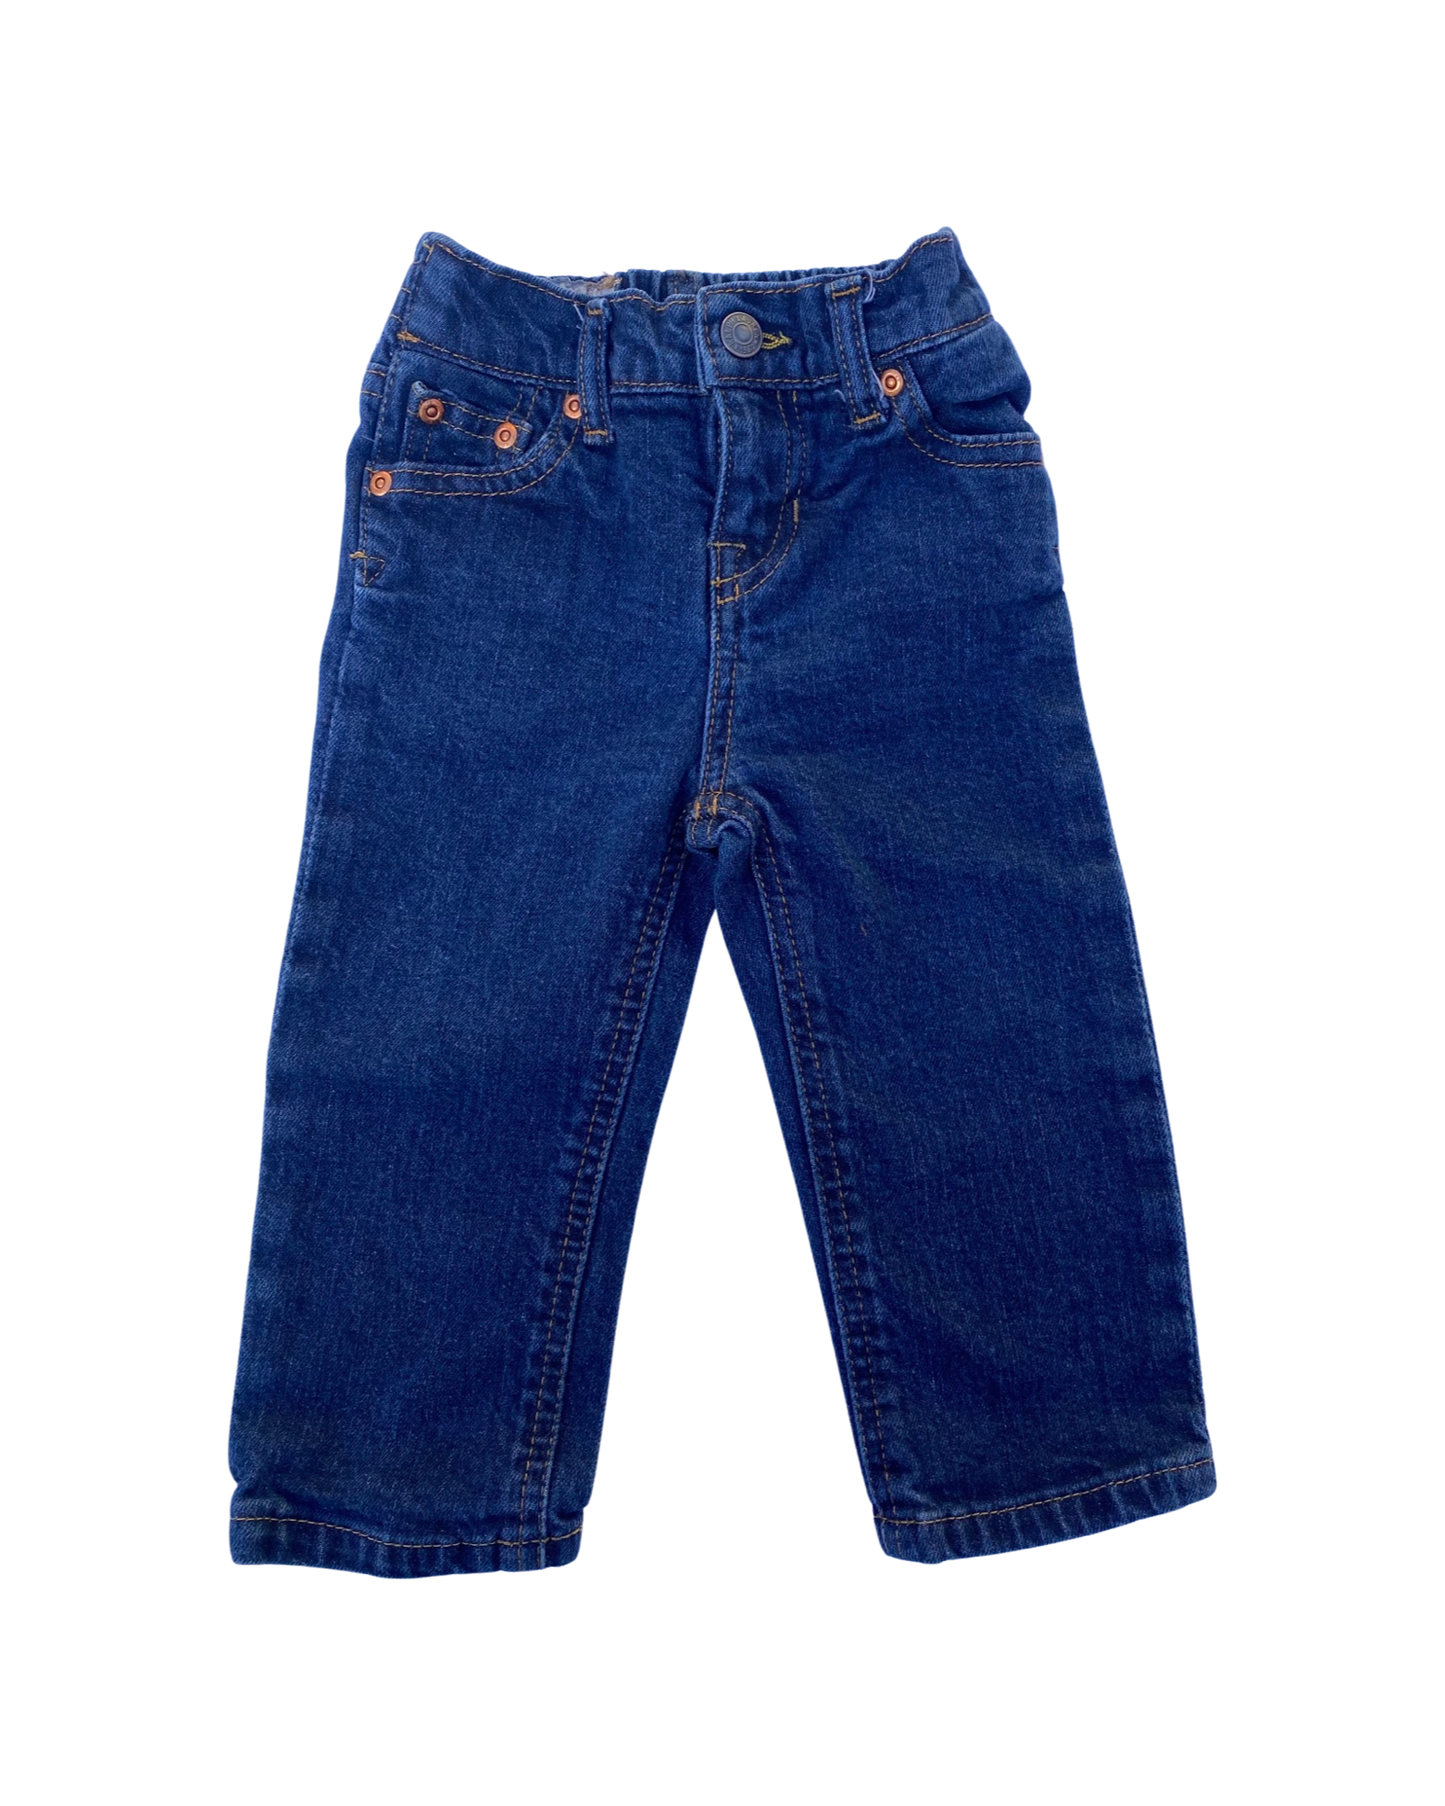 Polo Ralph Lauren mid wash jeans (size 12-18mths)